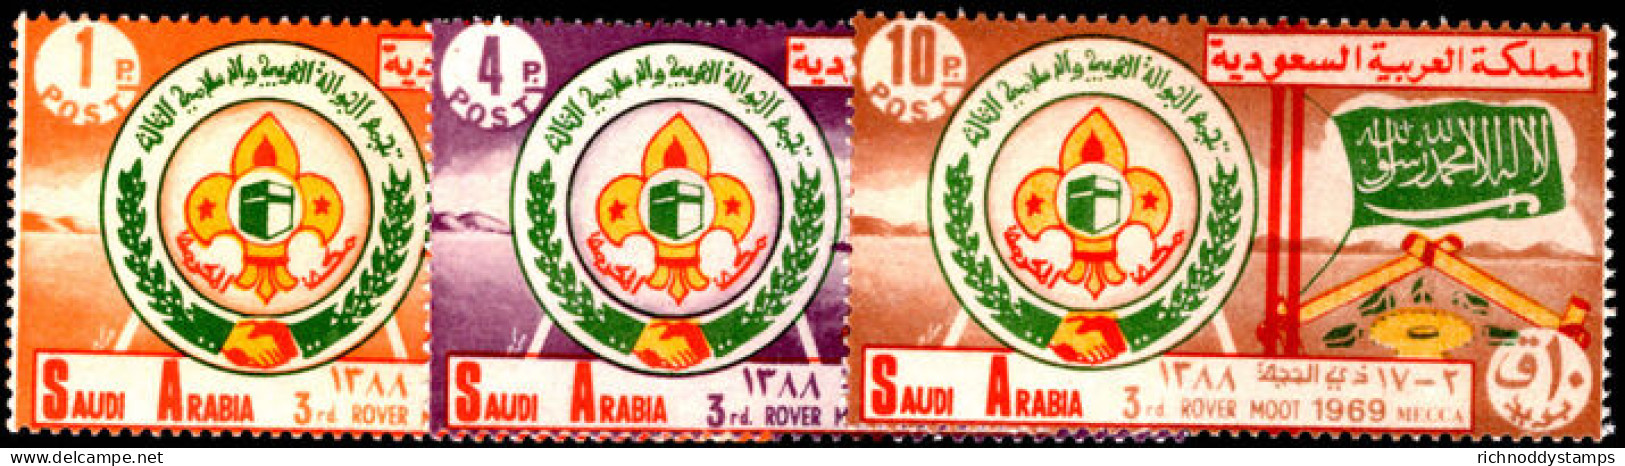 Saudi Arabia 1969 Third Arab Rover Moot Lightly Mounted Mint. - Arabia Saudita